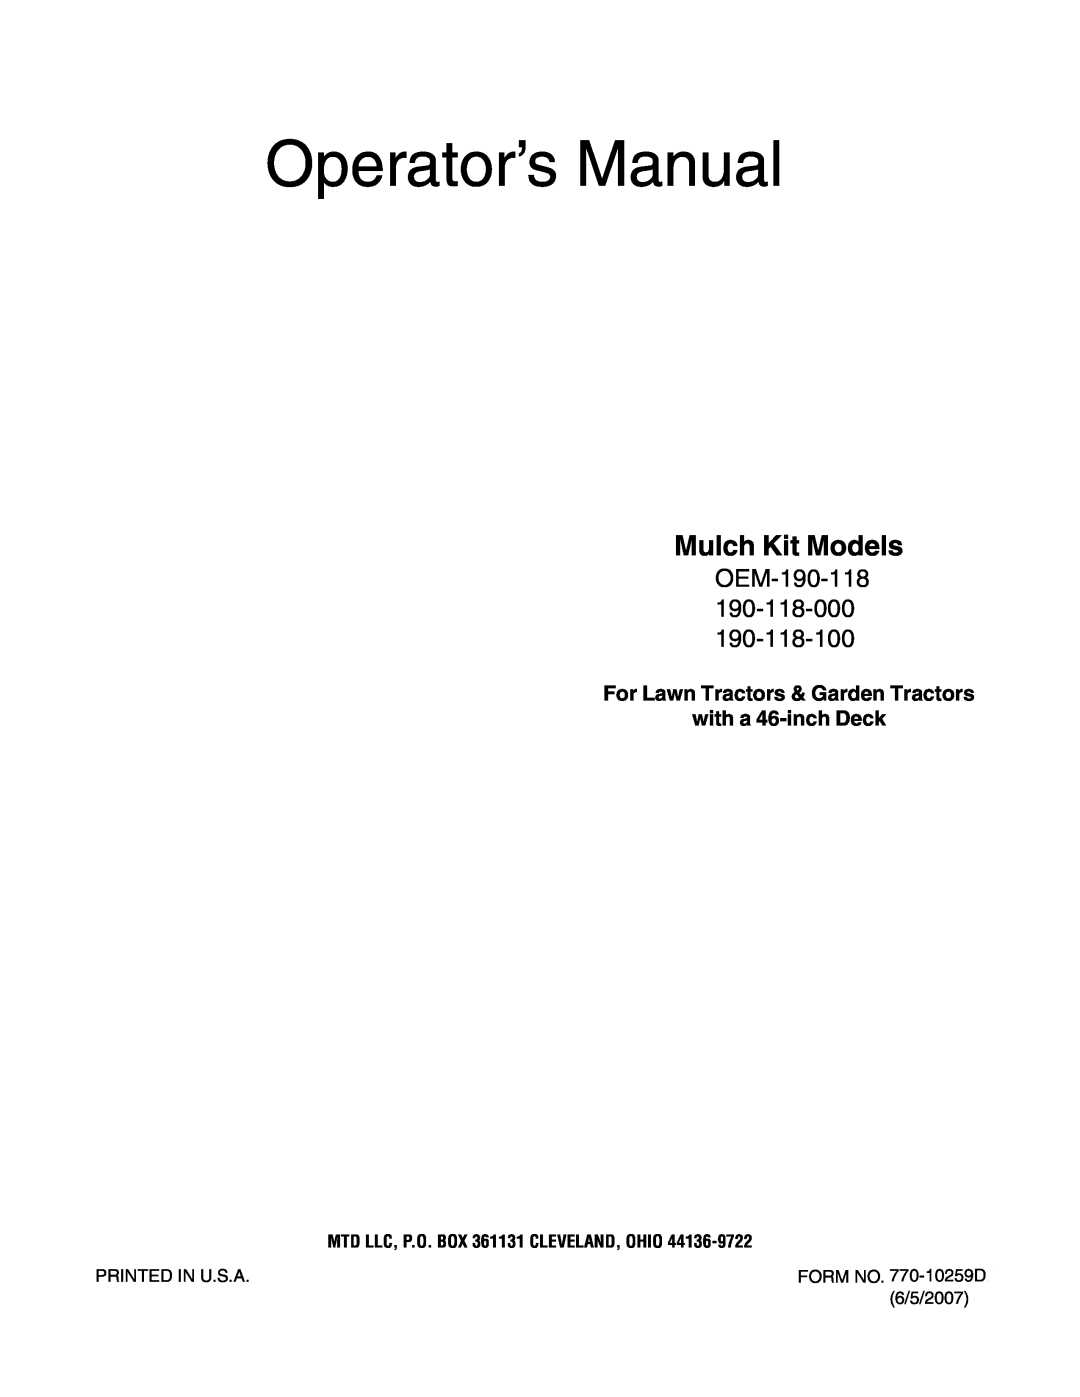 MTD 190-118-100 manual Mulch Kit Models, Operator’s Manual, OEM-190-118 190-118-000, For Lawn Tractors & Garden Tractors 